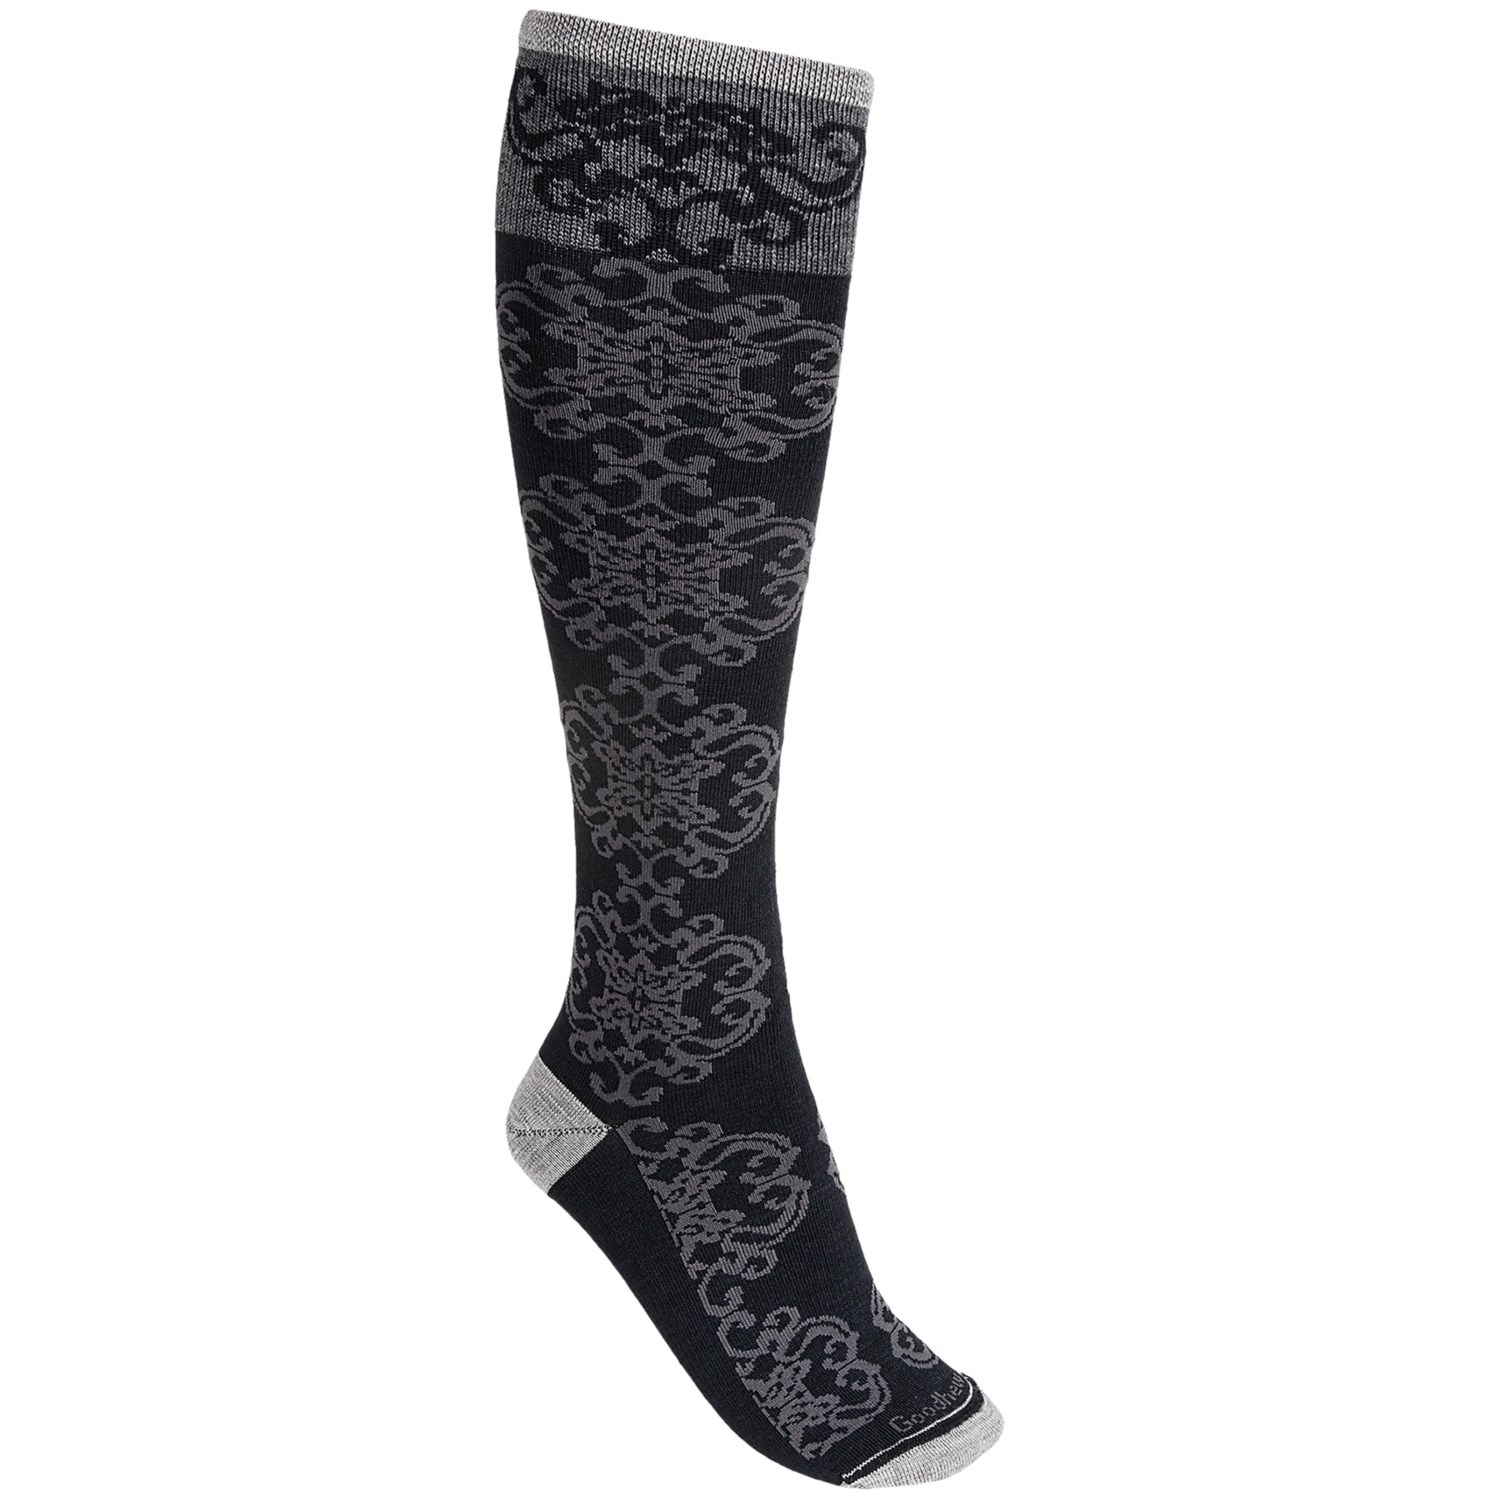 Goodhew Tapestry Socks (For Women) - Save 54%